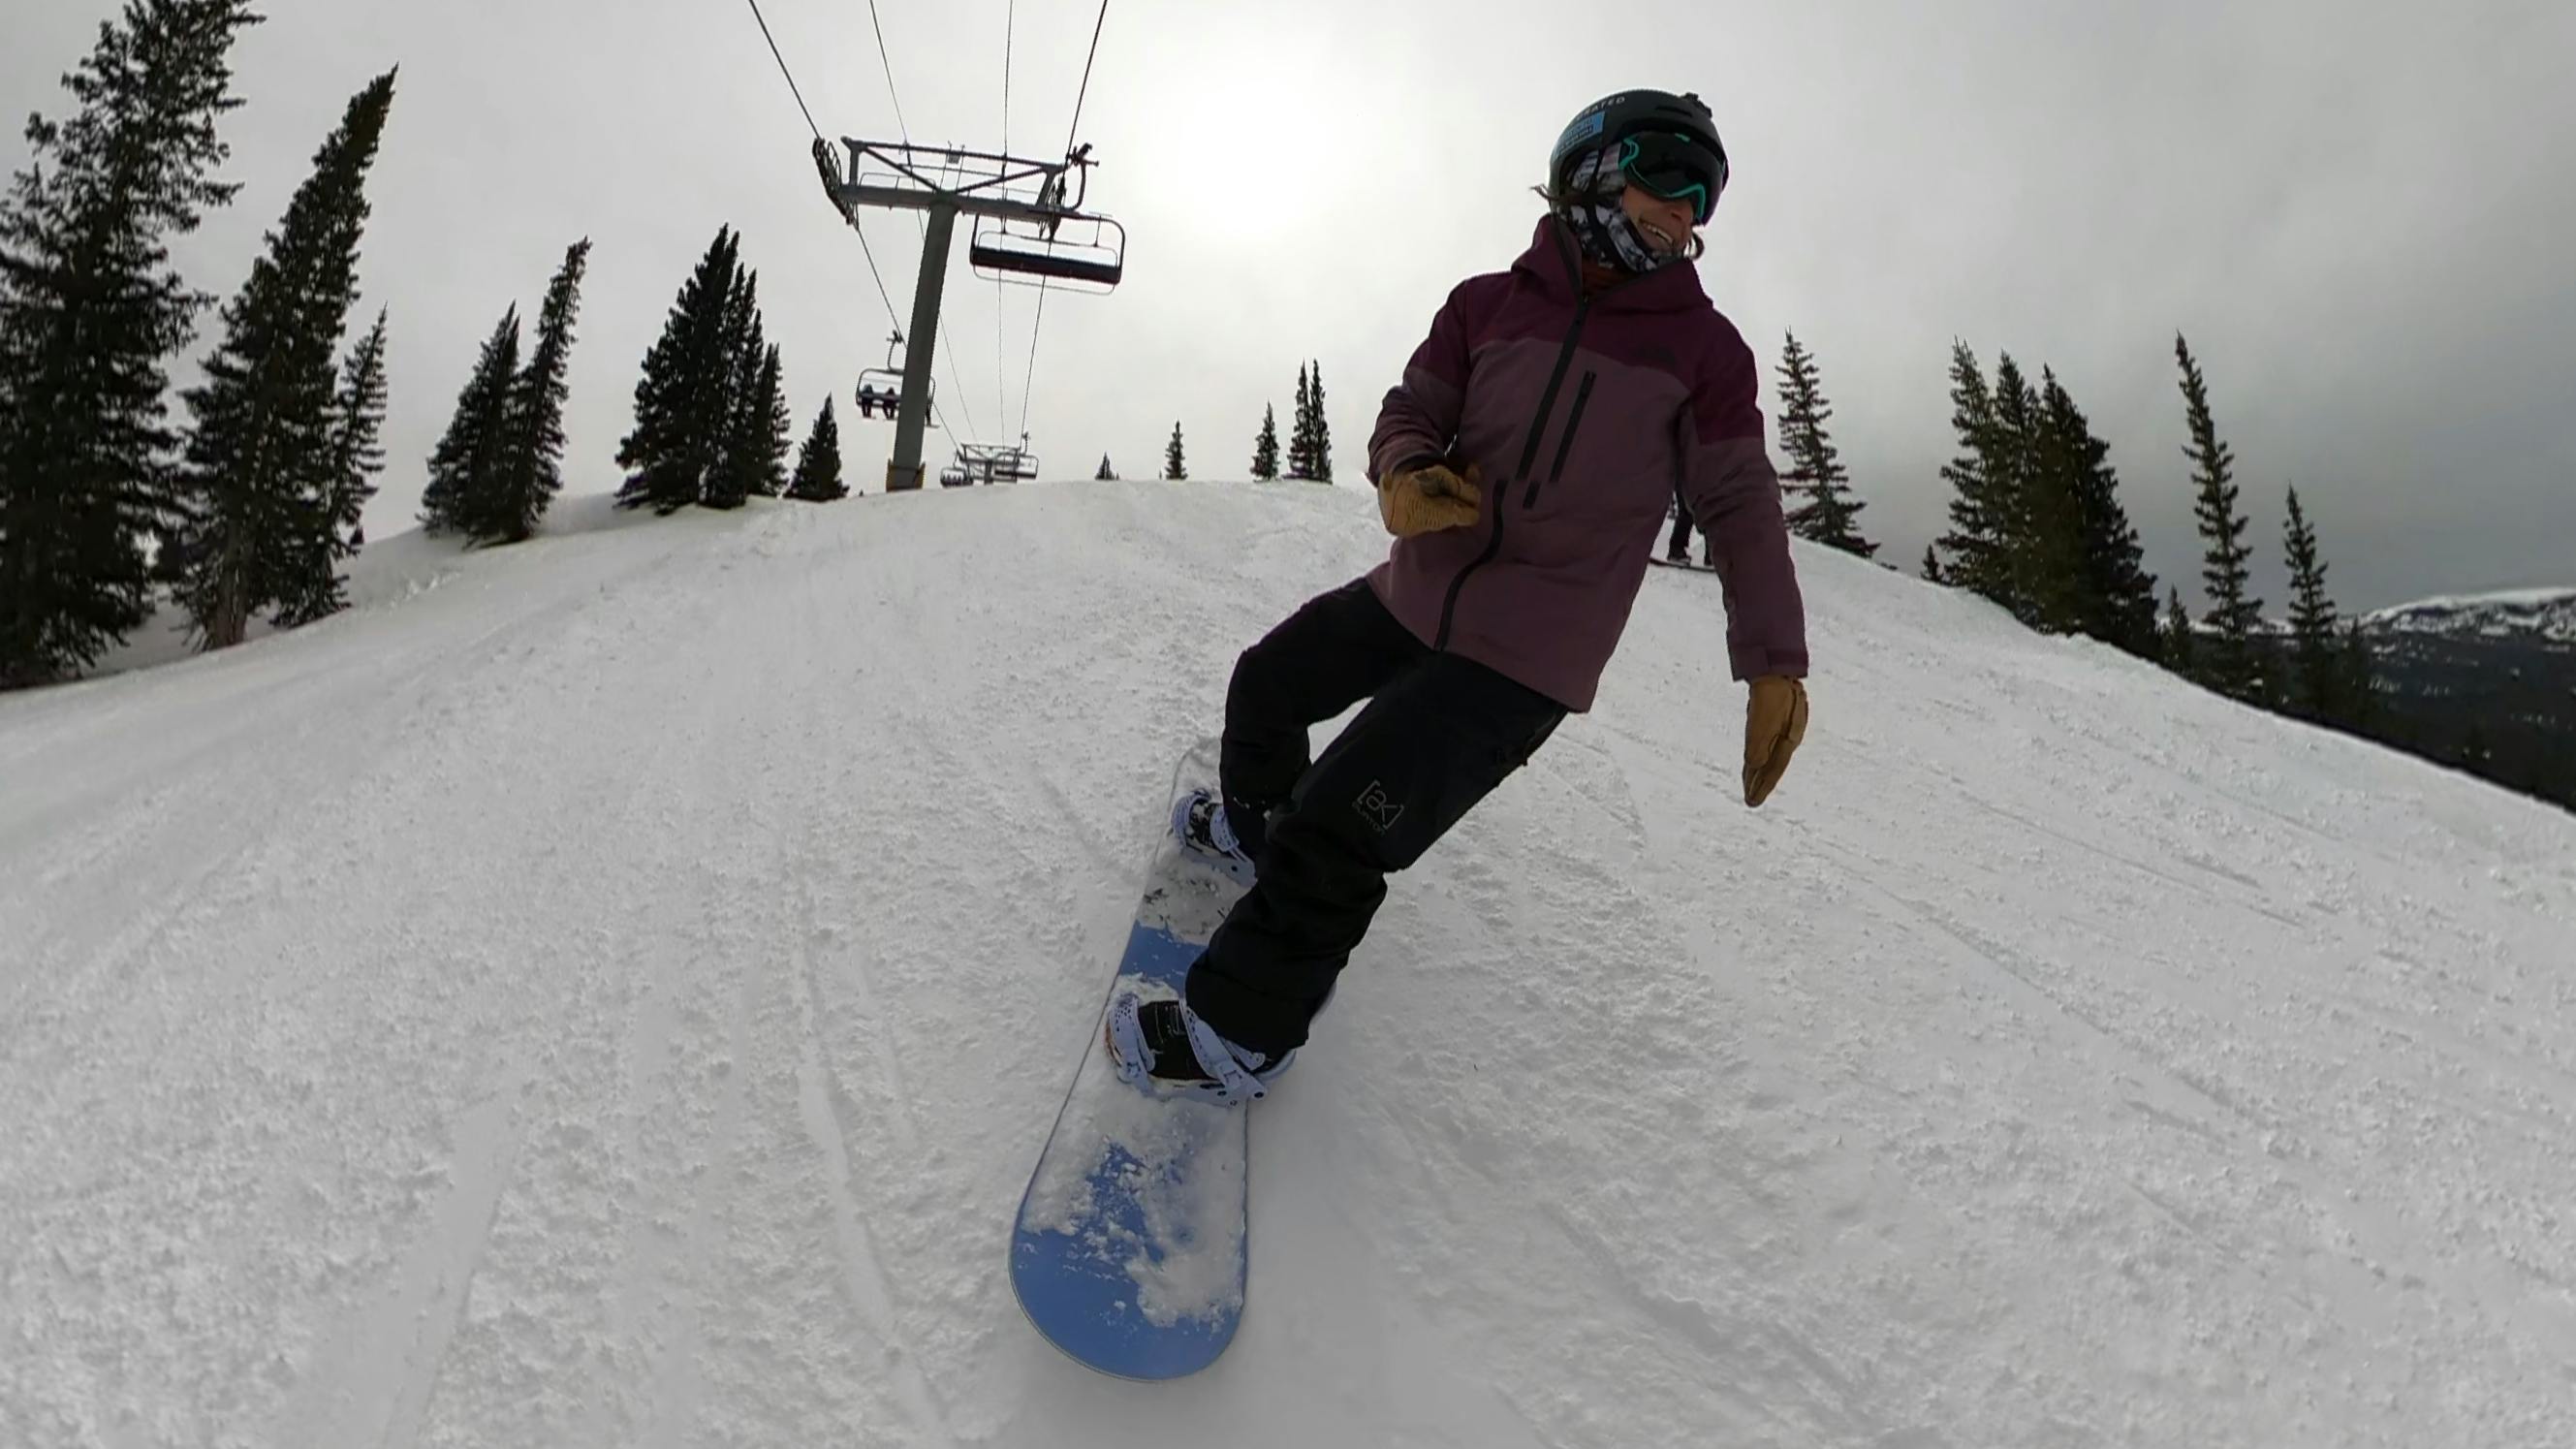 A snowboarder on the Roxy Dawn Snowboard. 